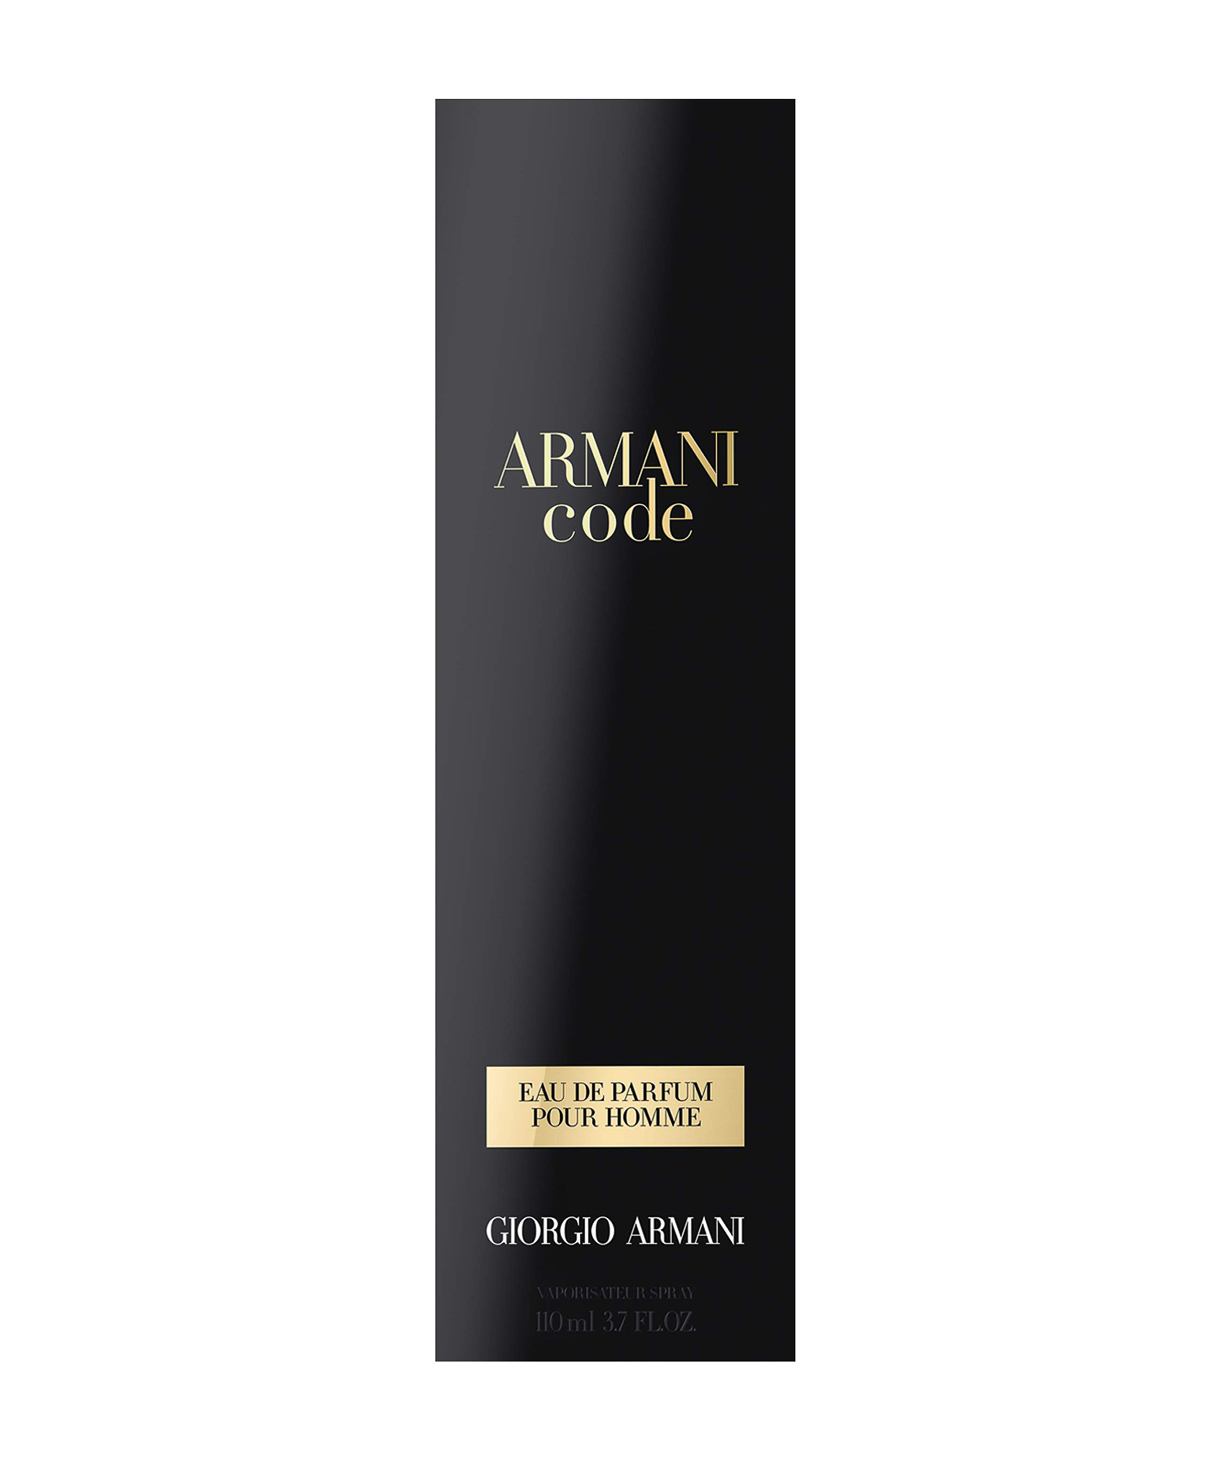 Օծանելիք «Armani» Code, 60 մլ